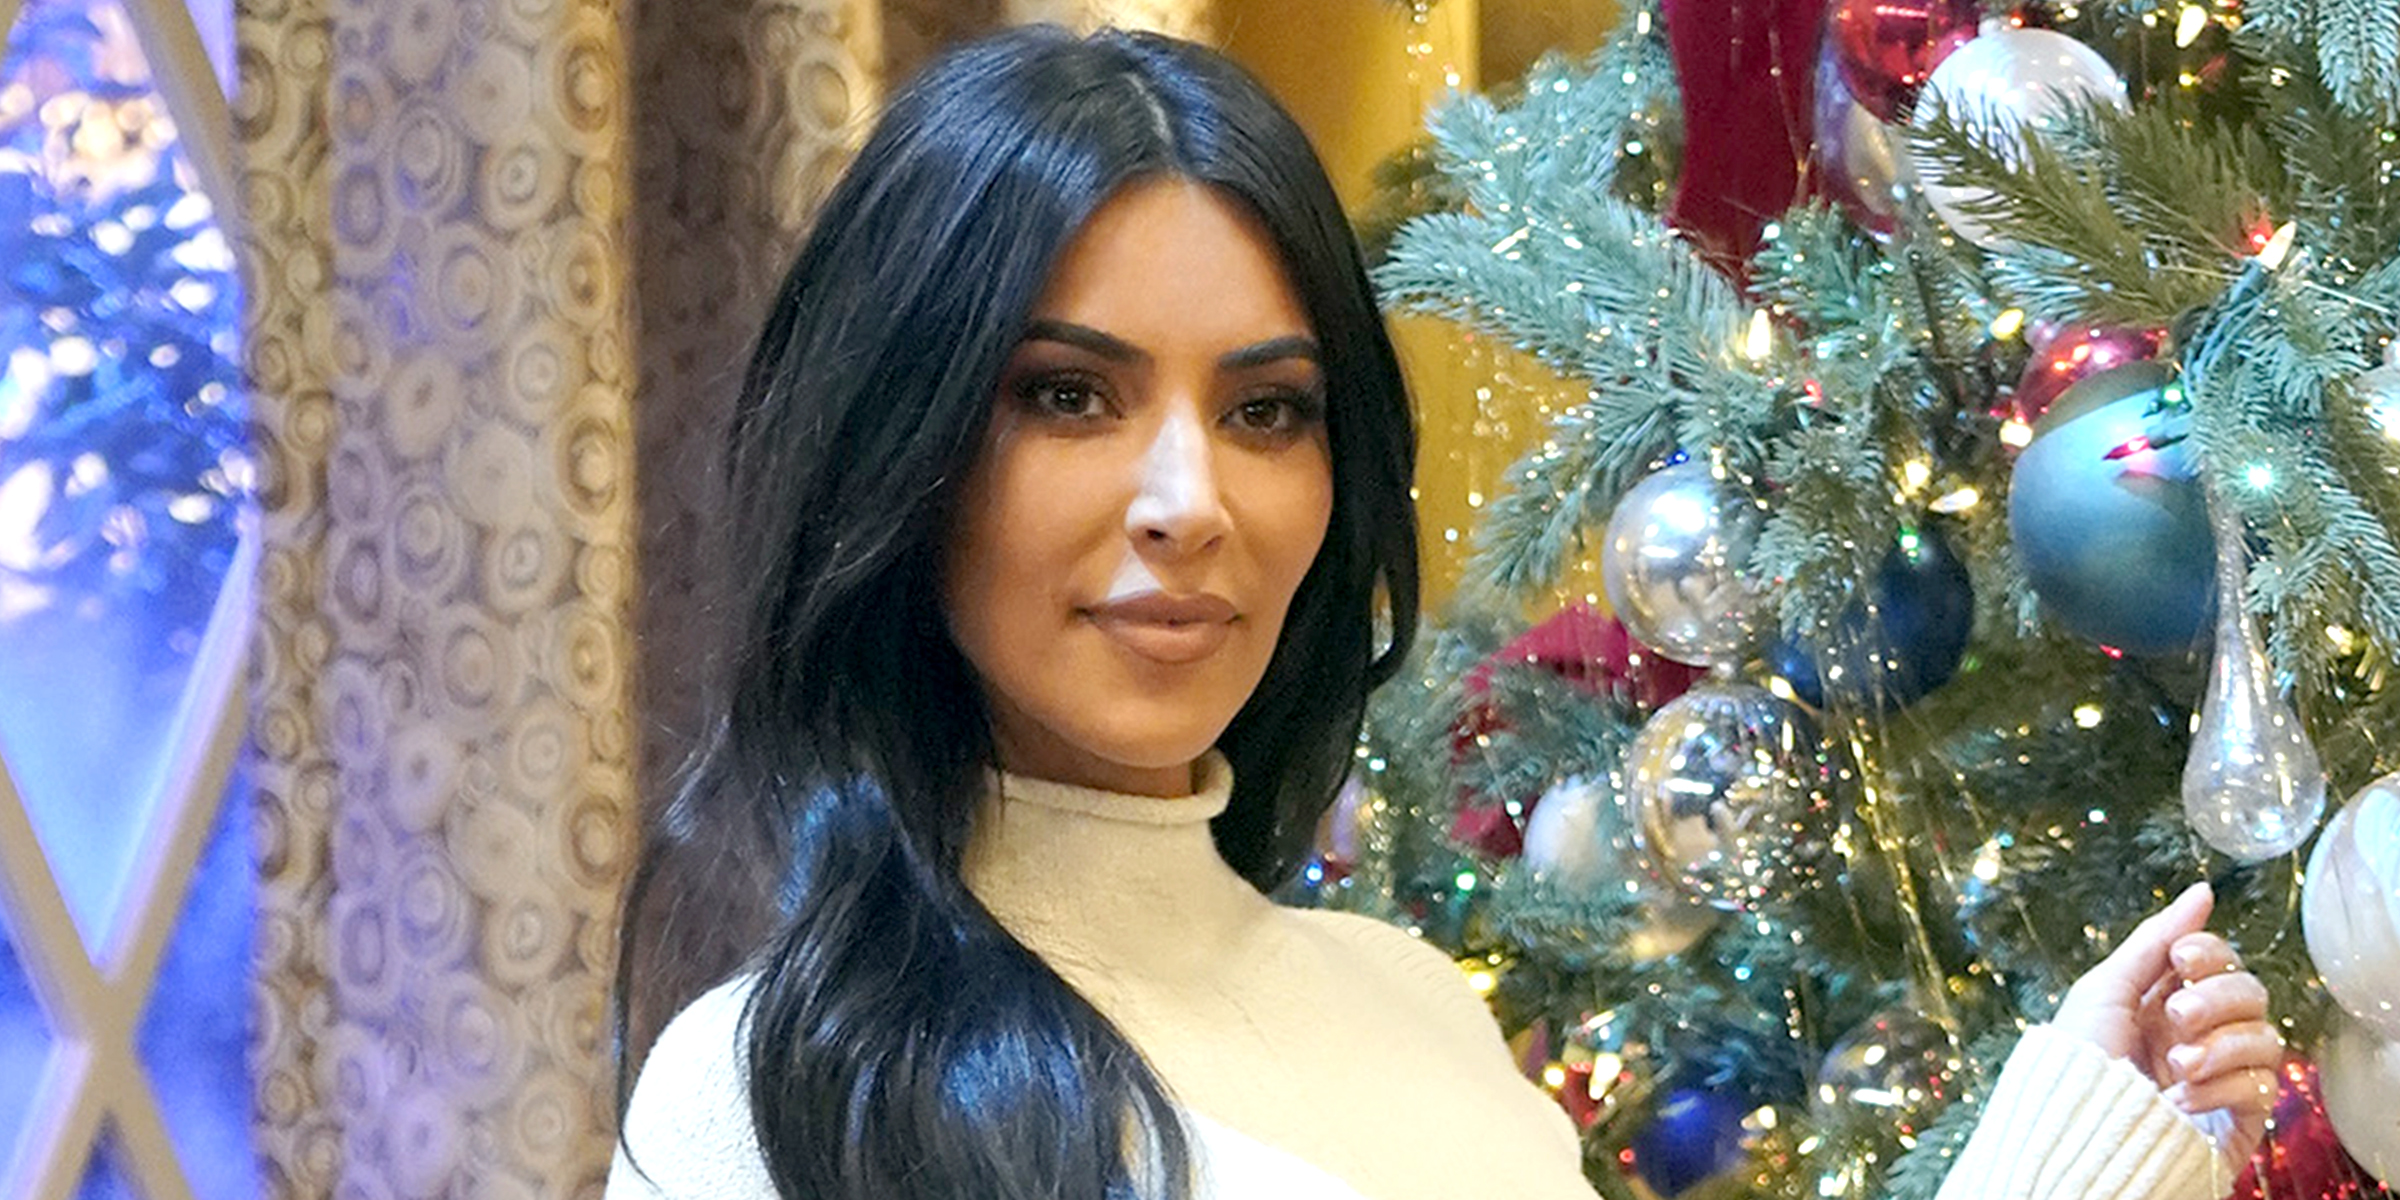 La impactante decoración navideña de Kim Kardashian